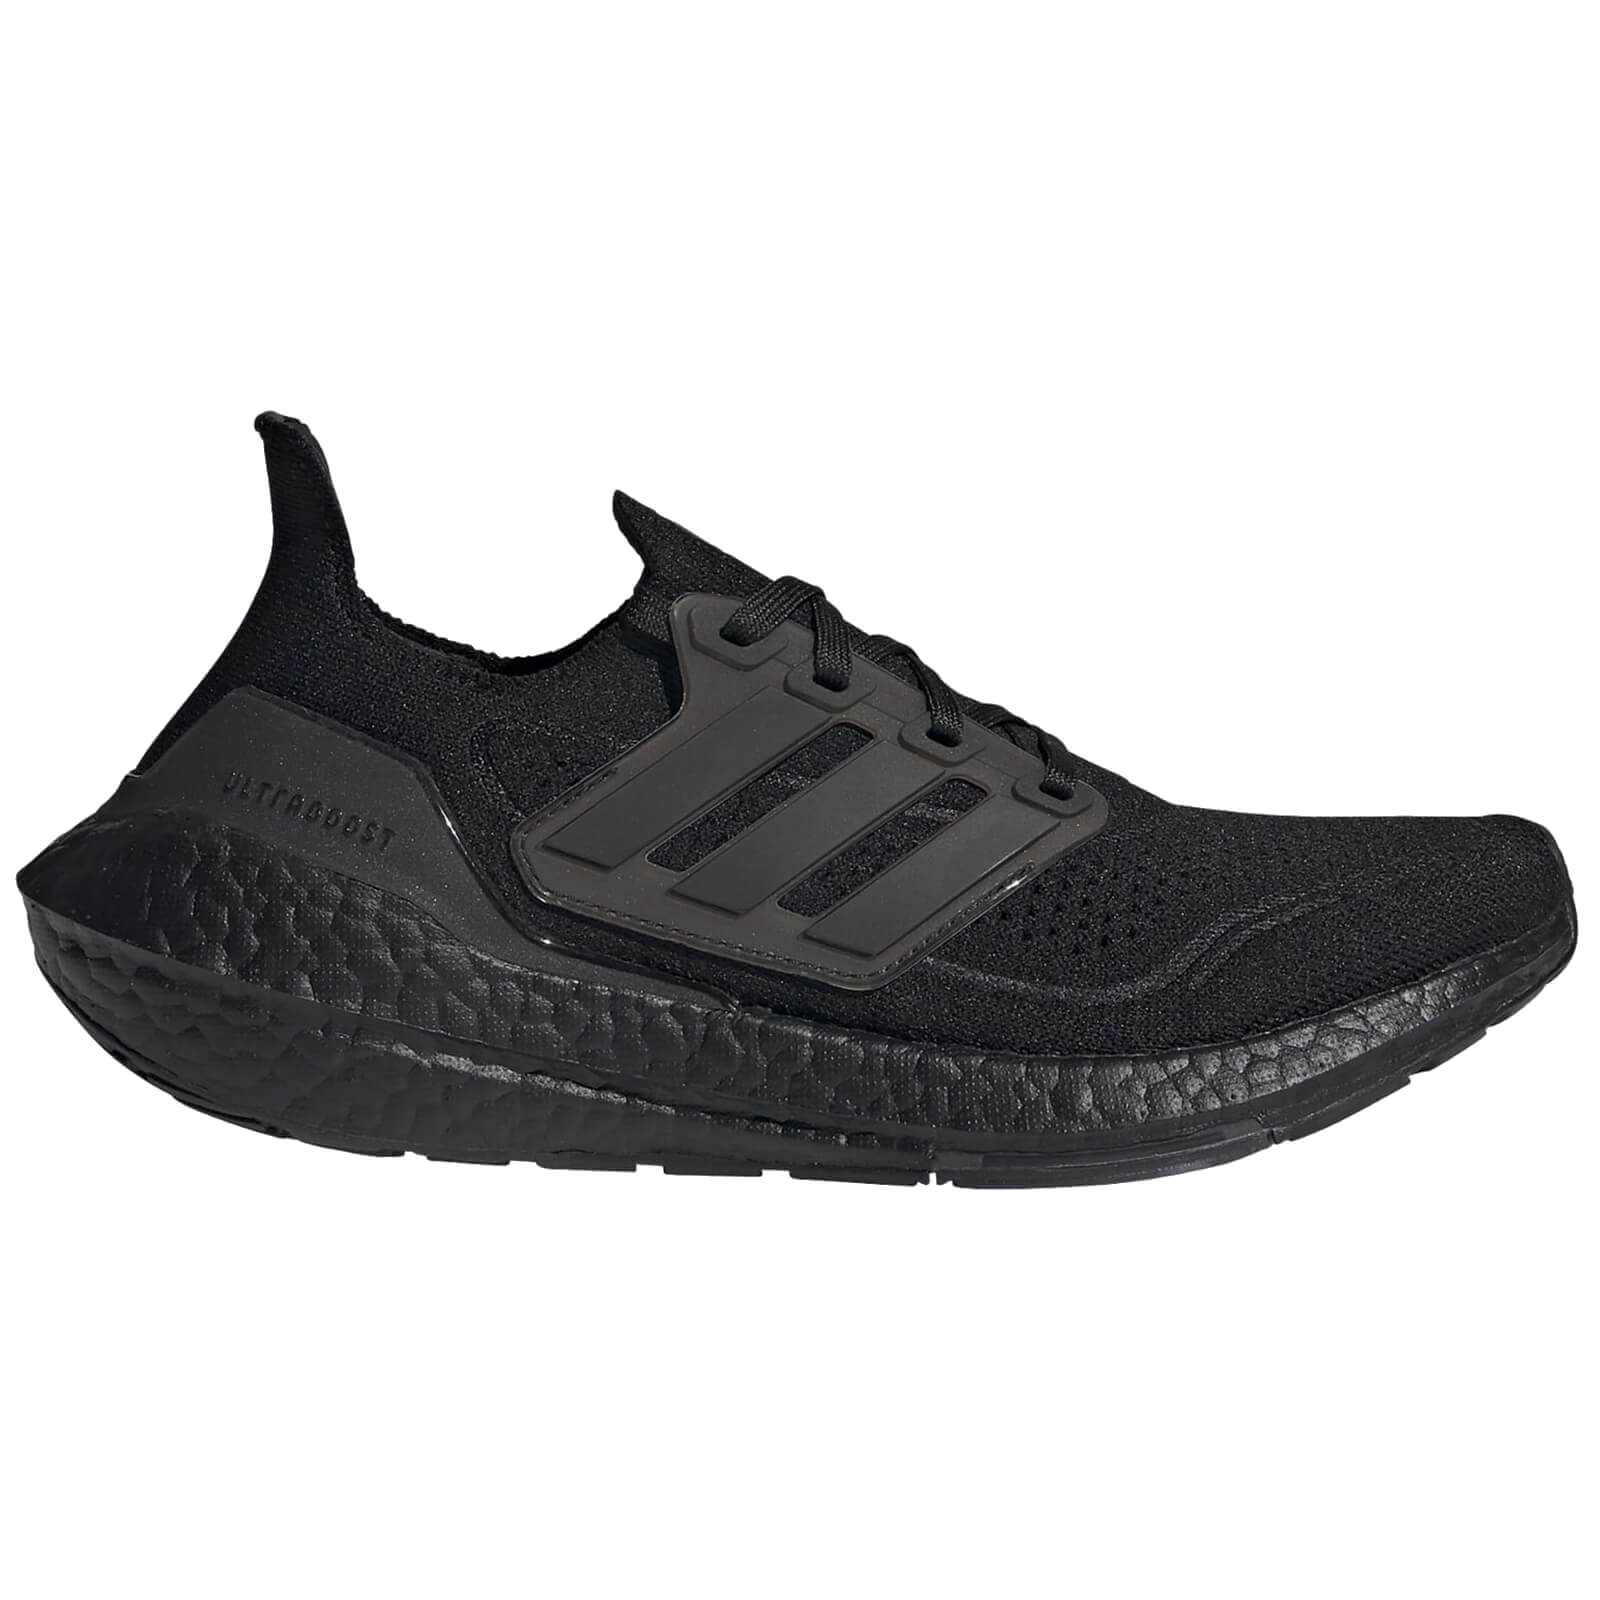 Adidas Women's Ultra Boost 21 Running Shoes - Core Black/Core Black/Core Black - US 5.5/UK 4